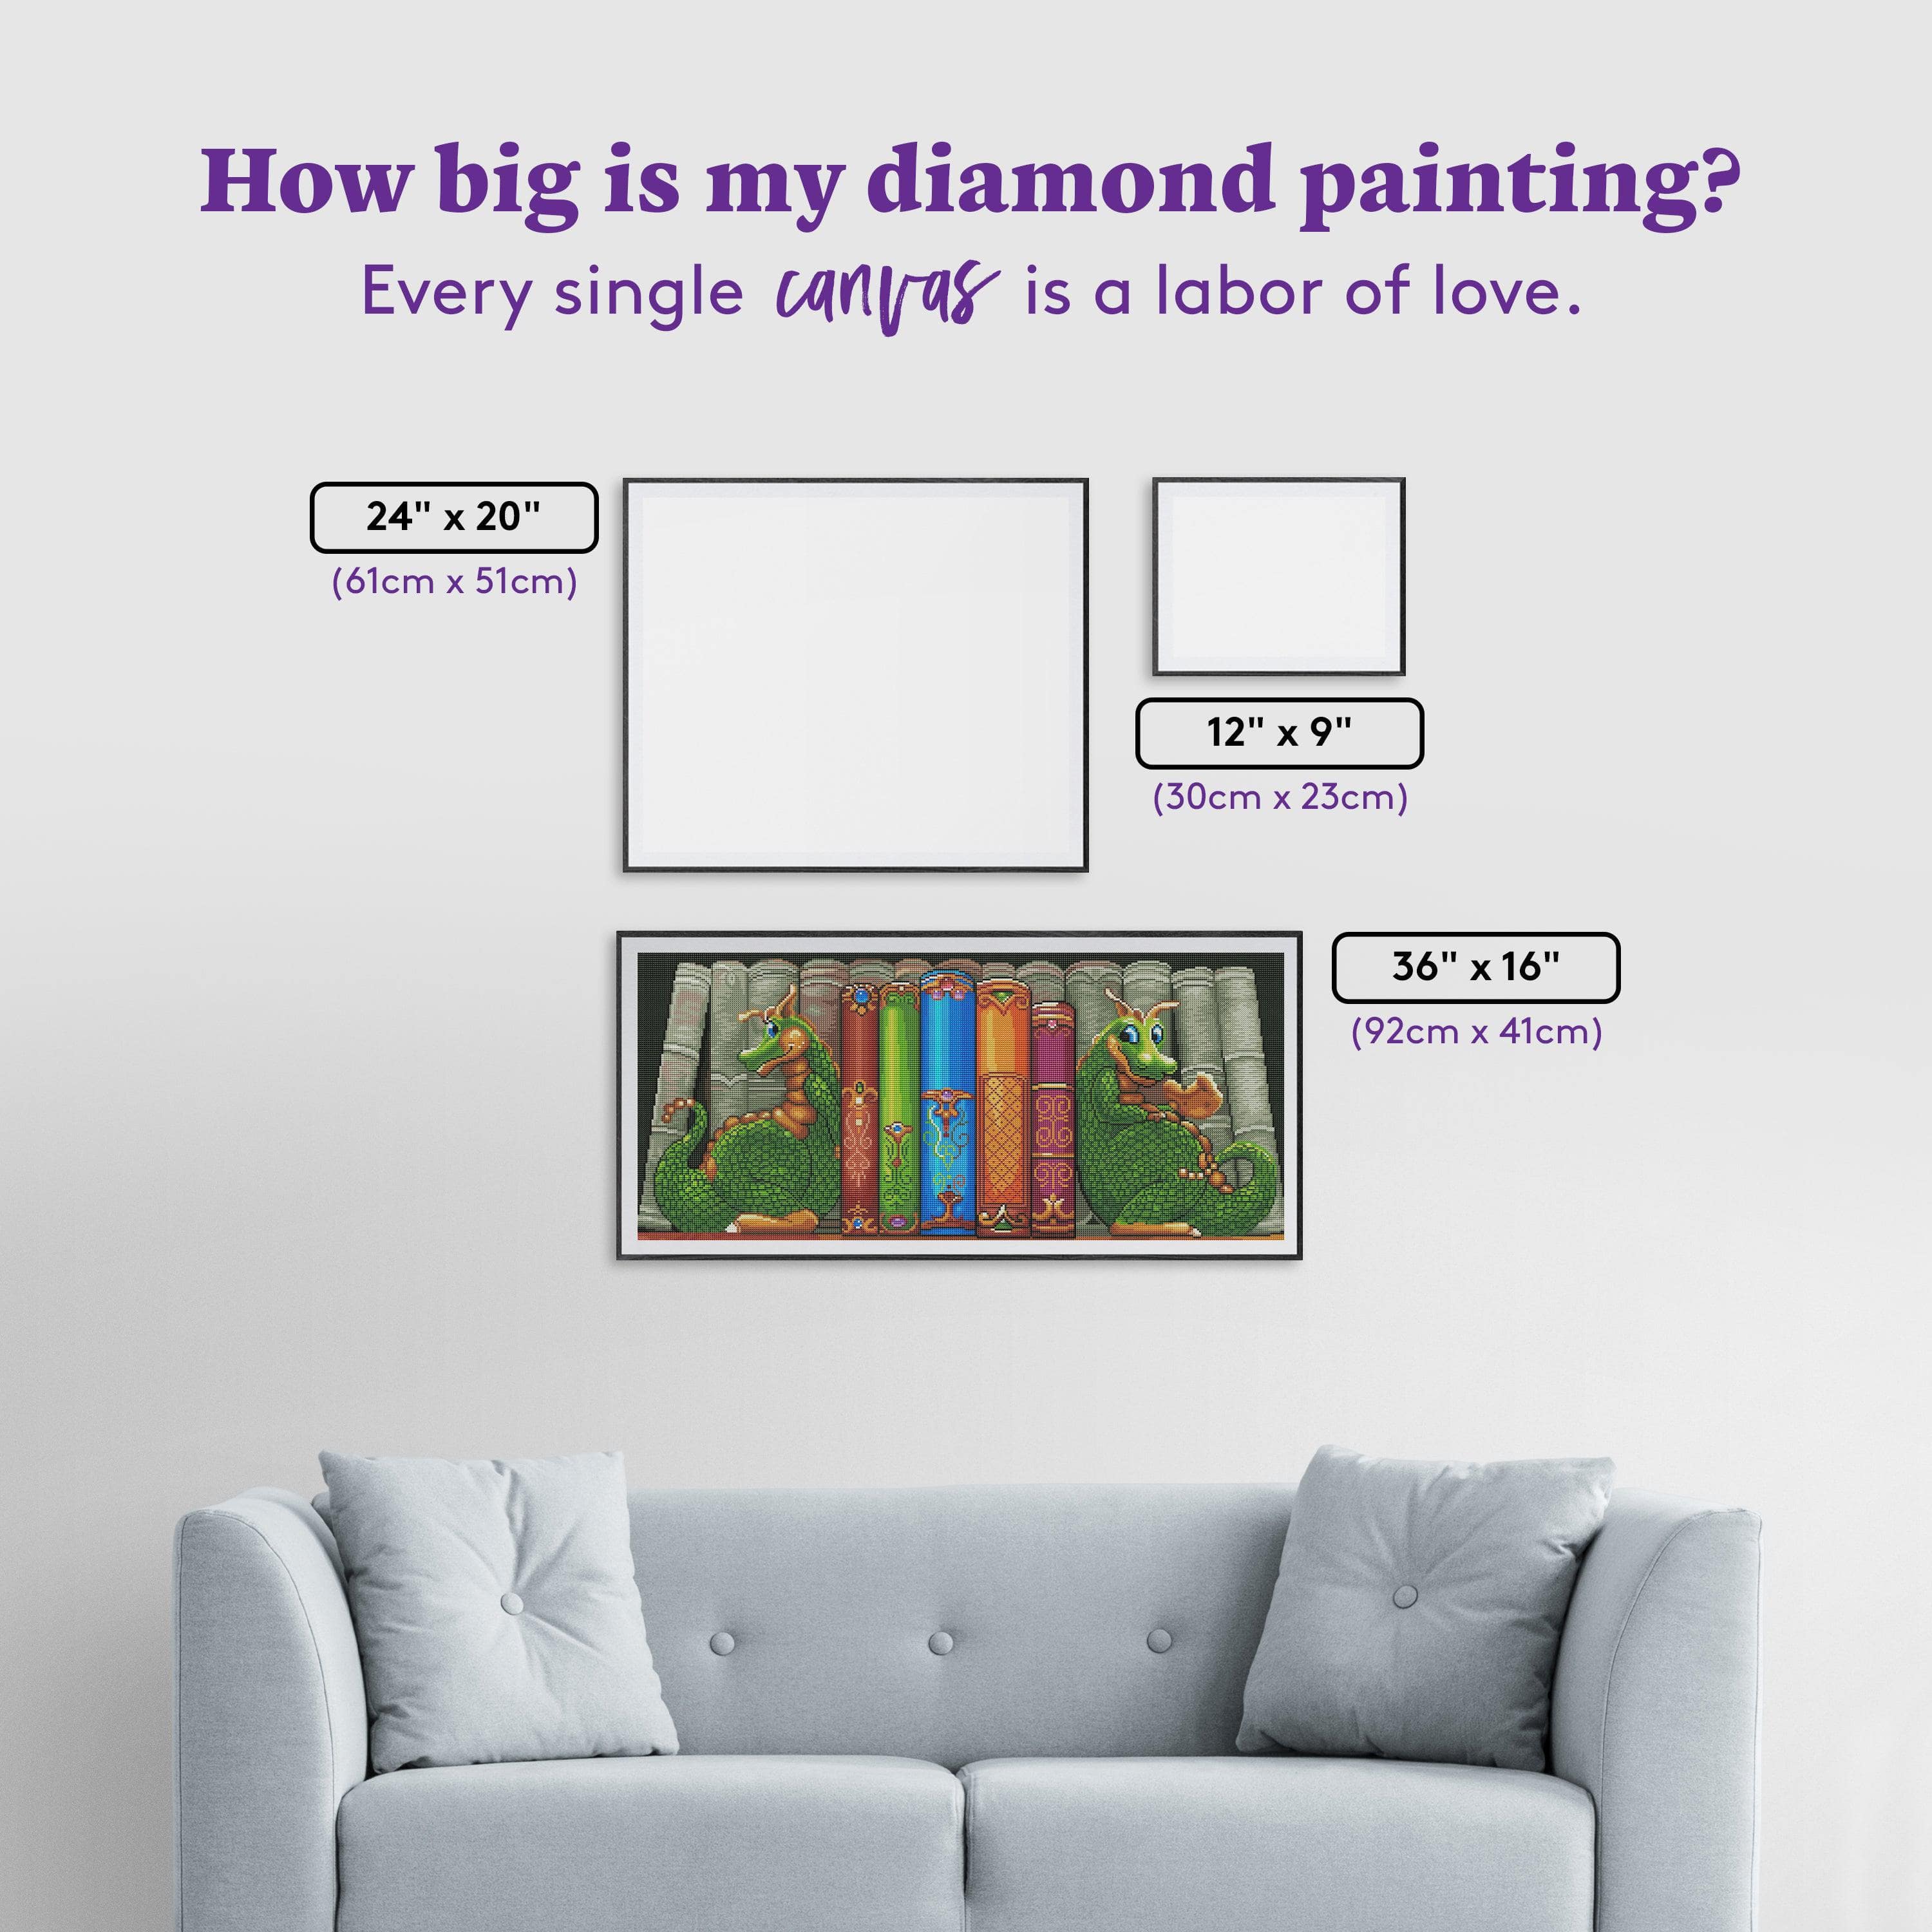 Best website to get a custom diamond art set? : r/diamondpainting